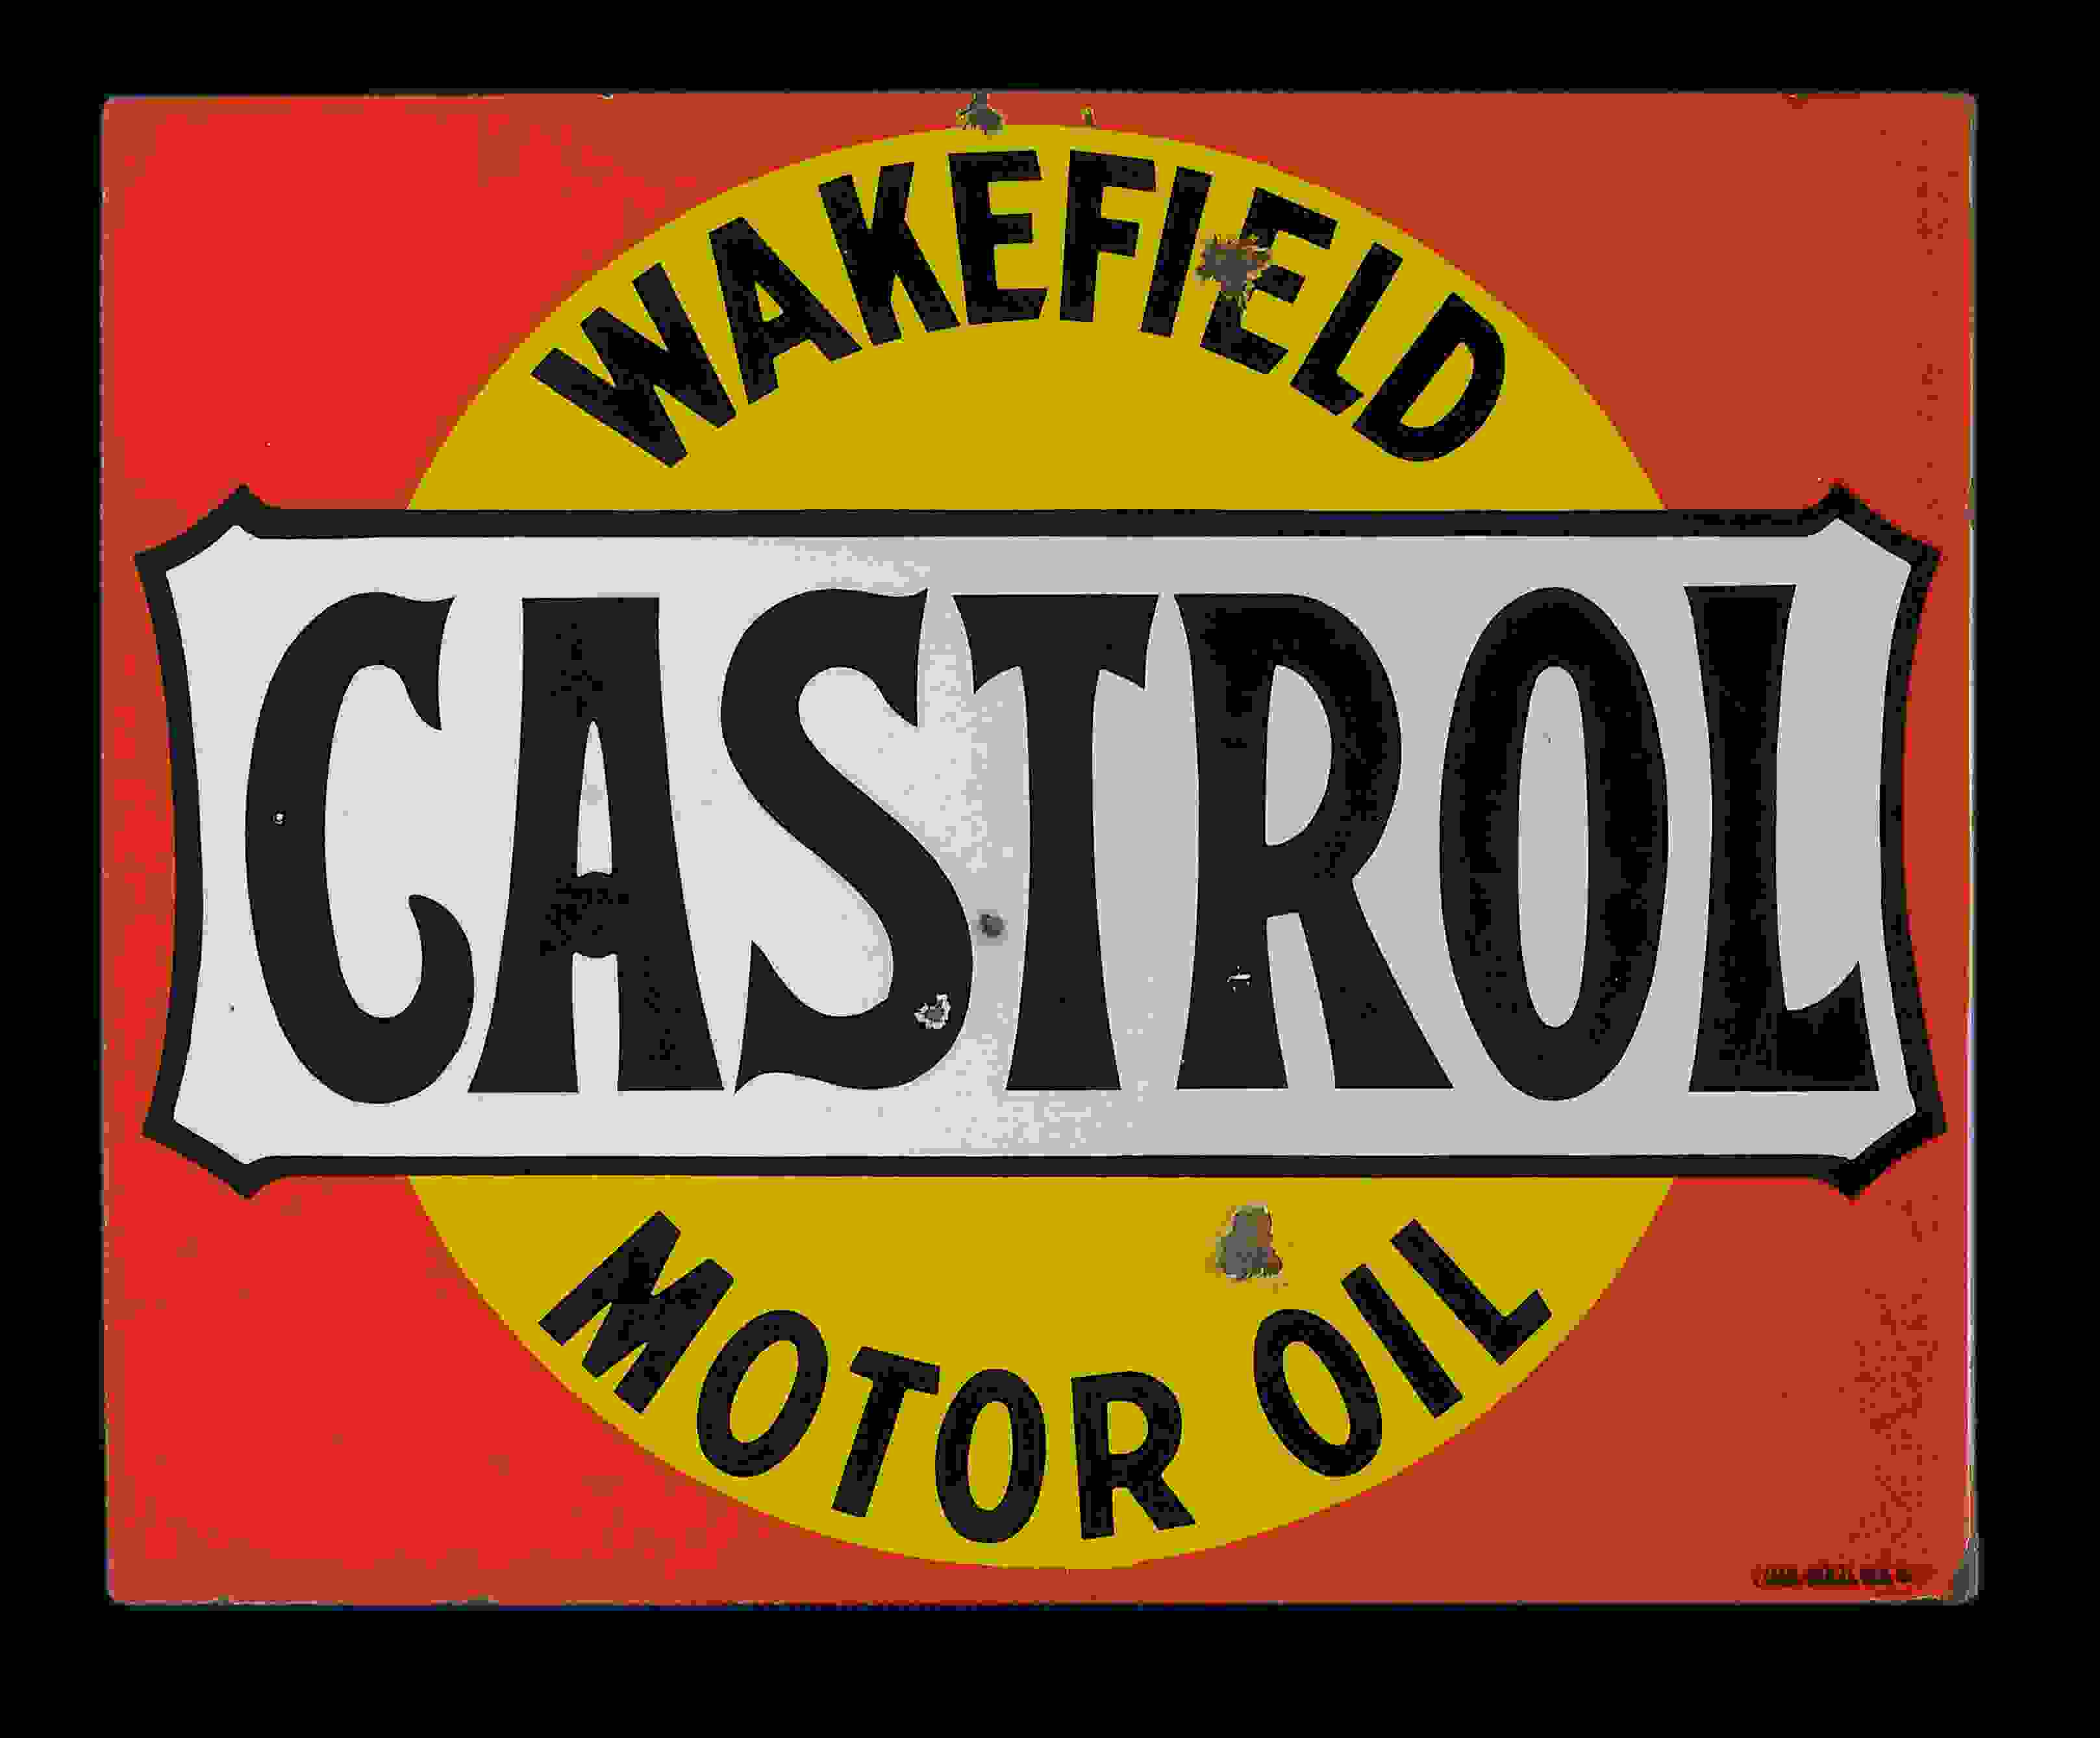 Castrol Motor Oil Ausleger 